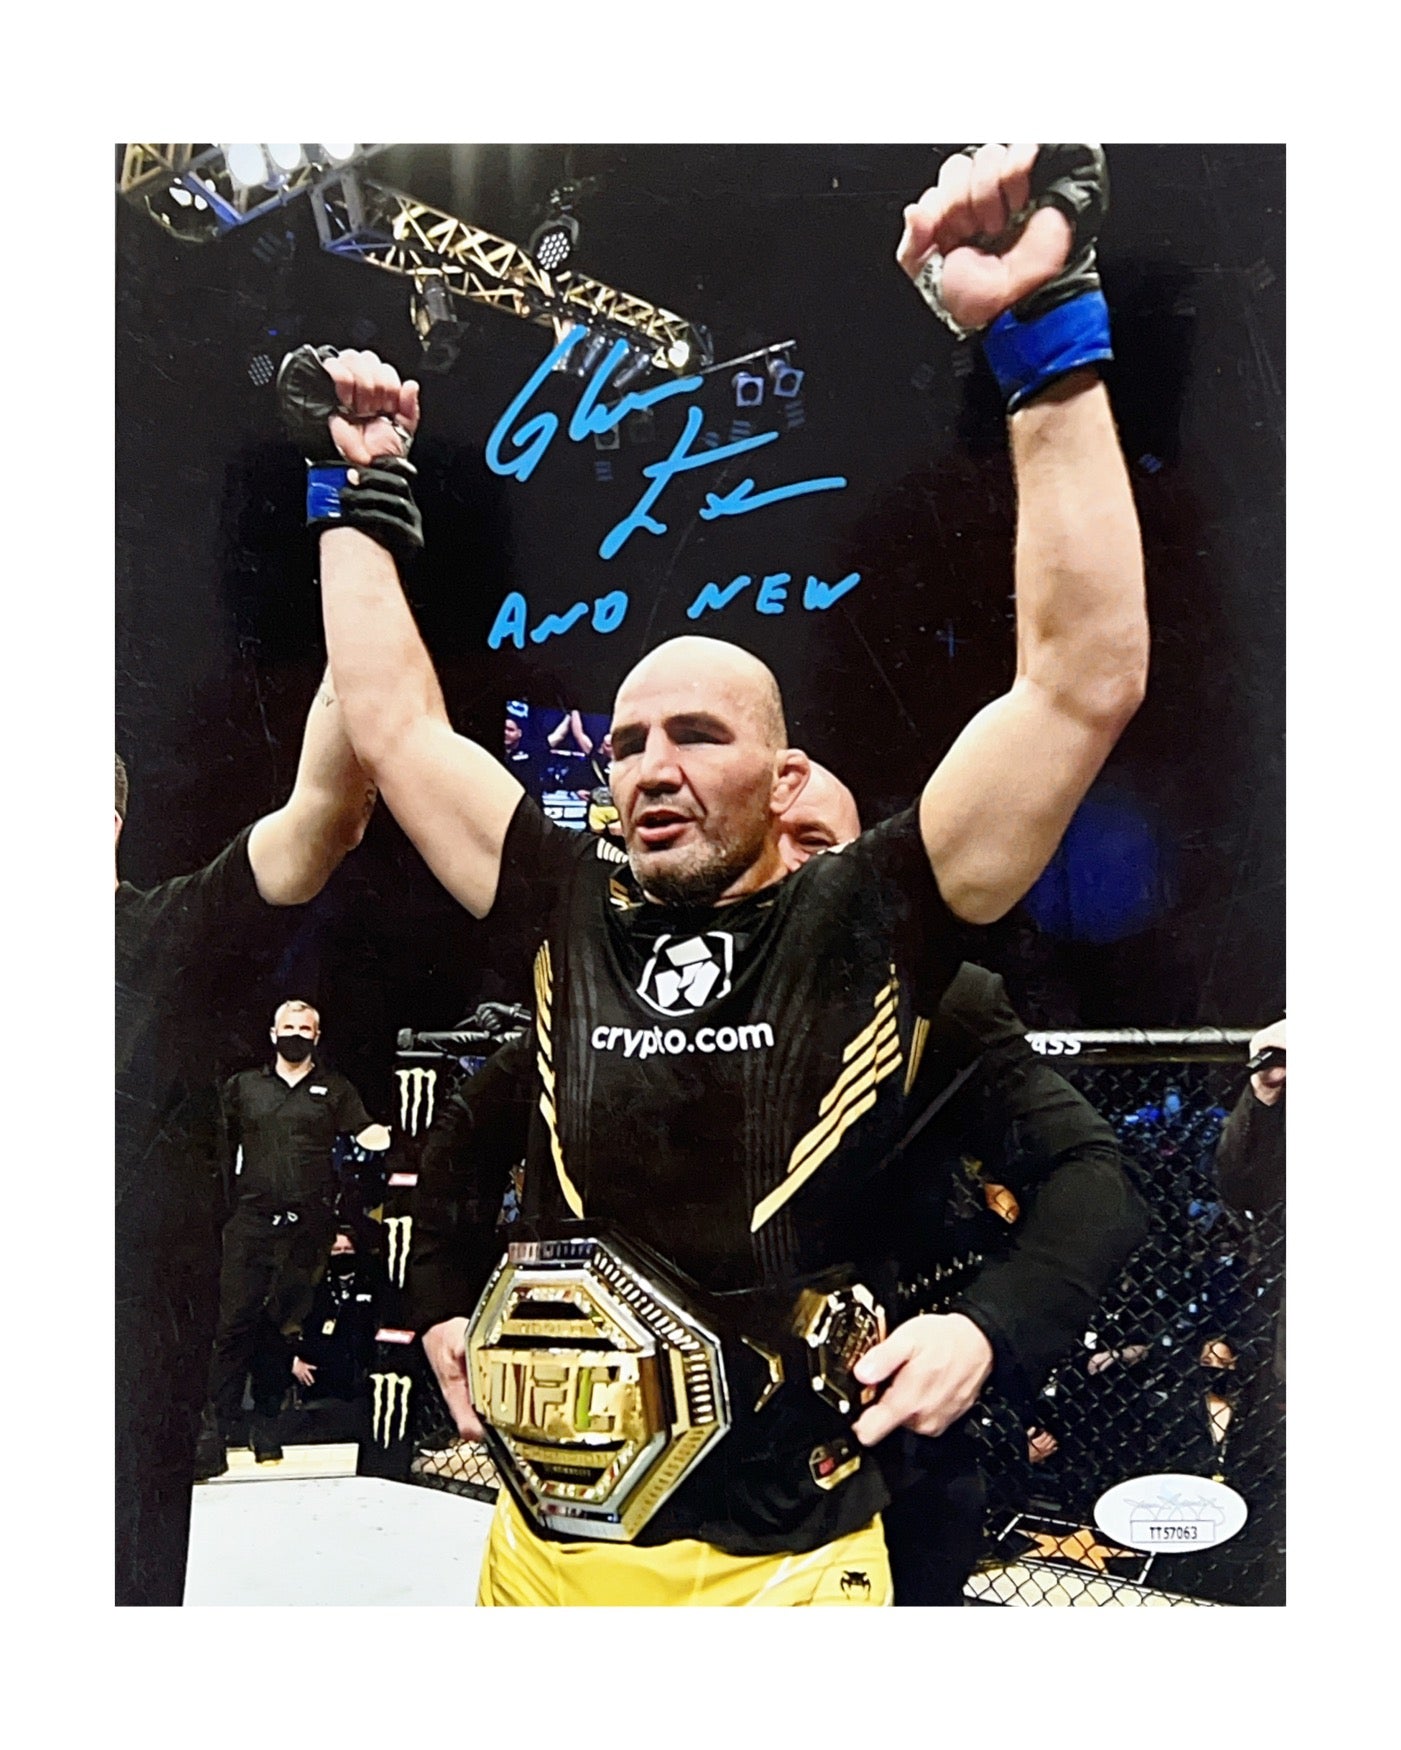 Glover Teixeira Autographed UFC 8x10 "And New" Inscription JSA